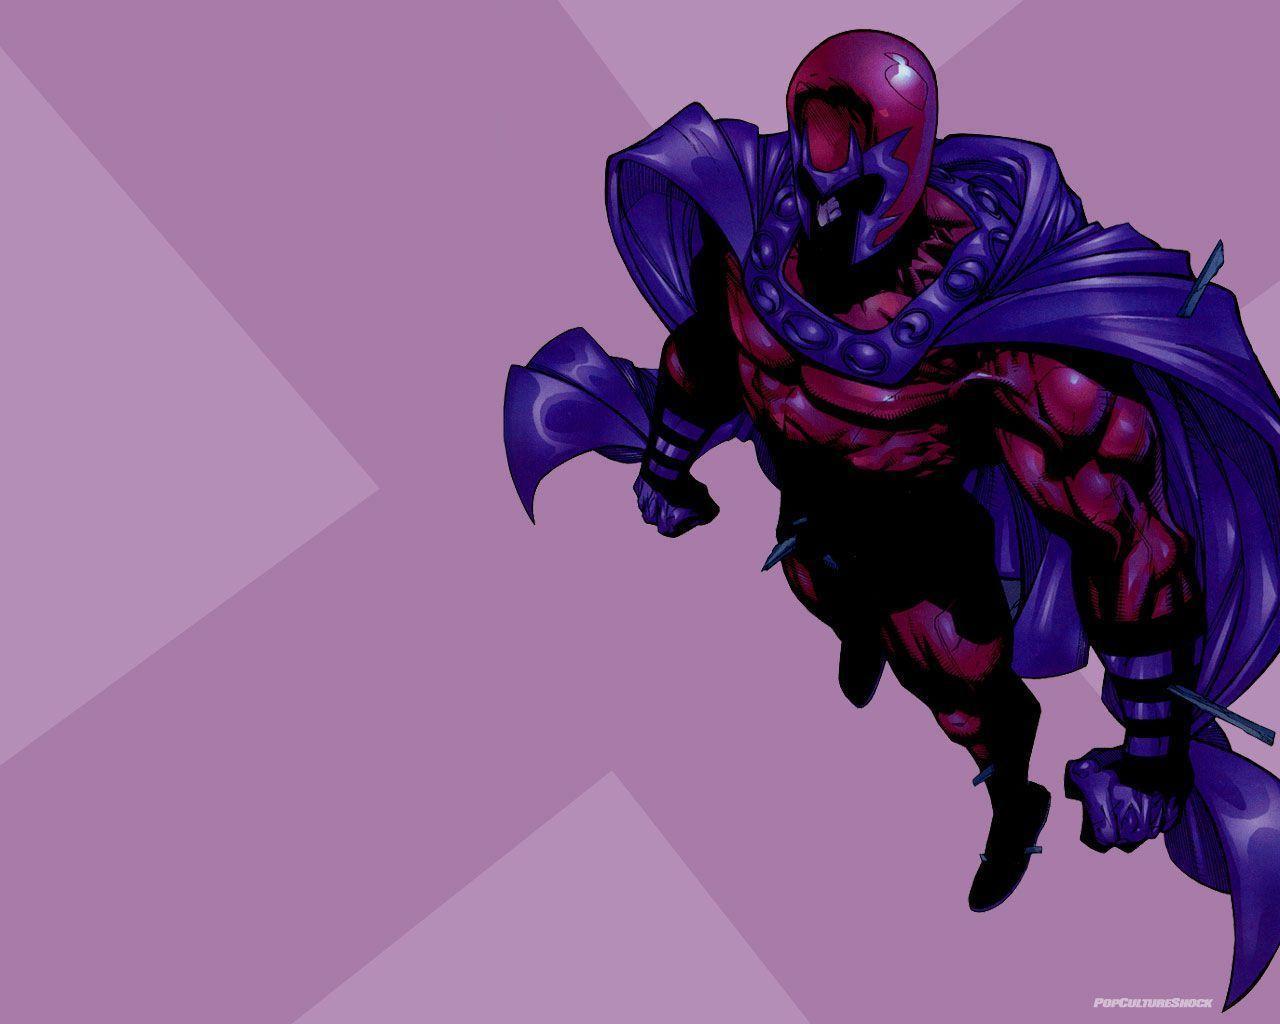 Free Magneto desktop wallpaper